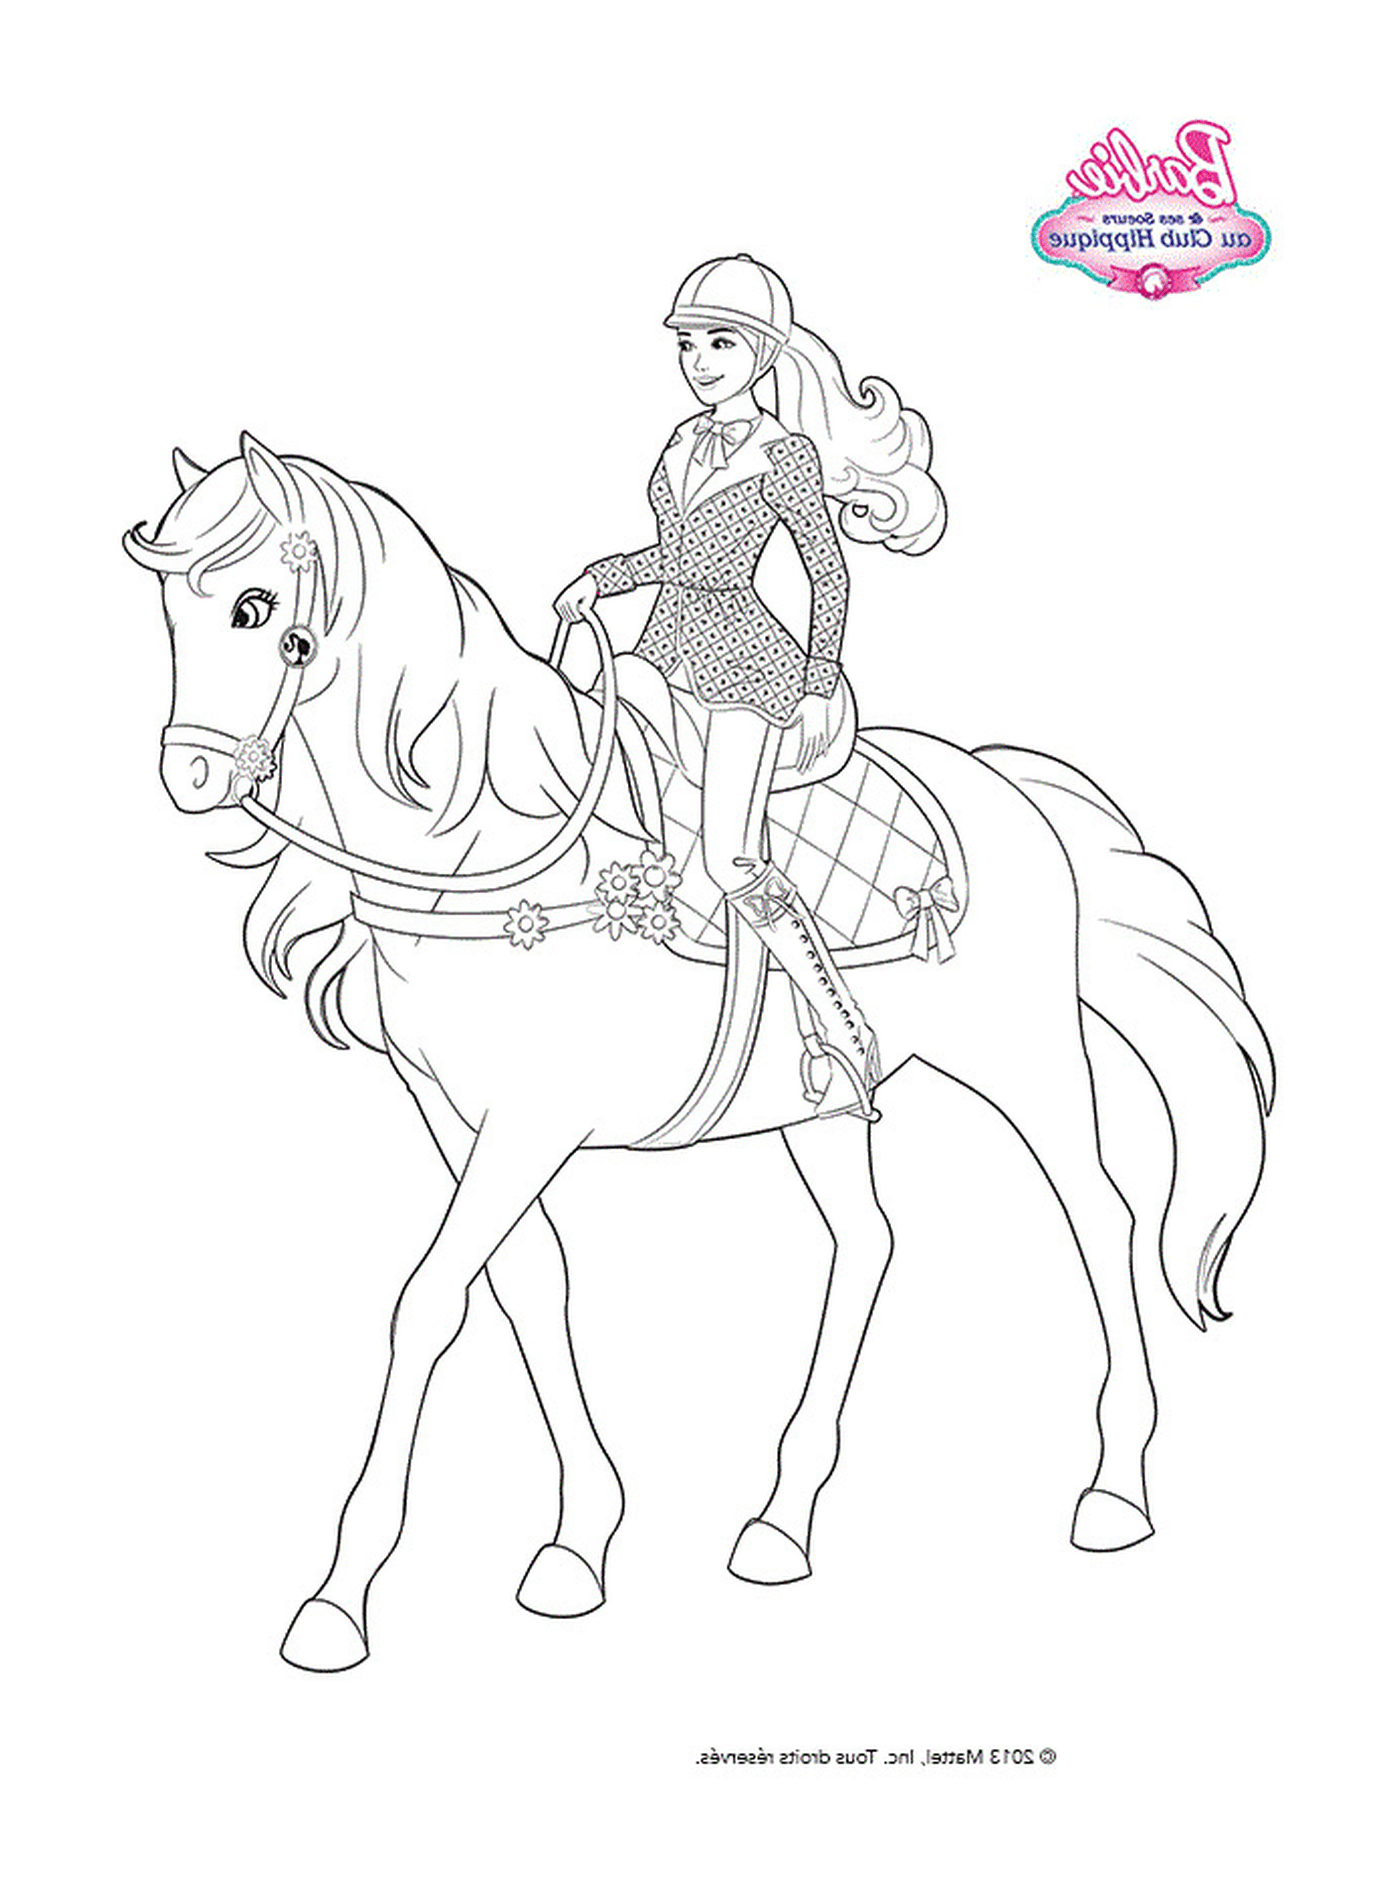  A Barbie doll riding a horse 